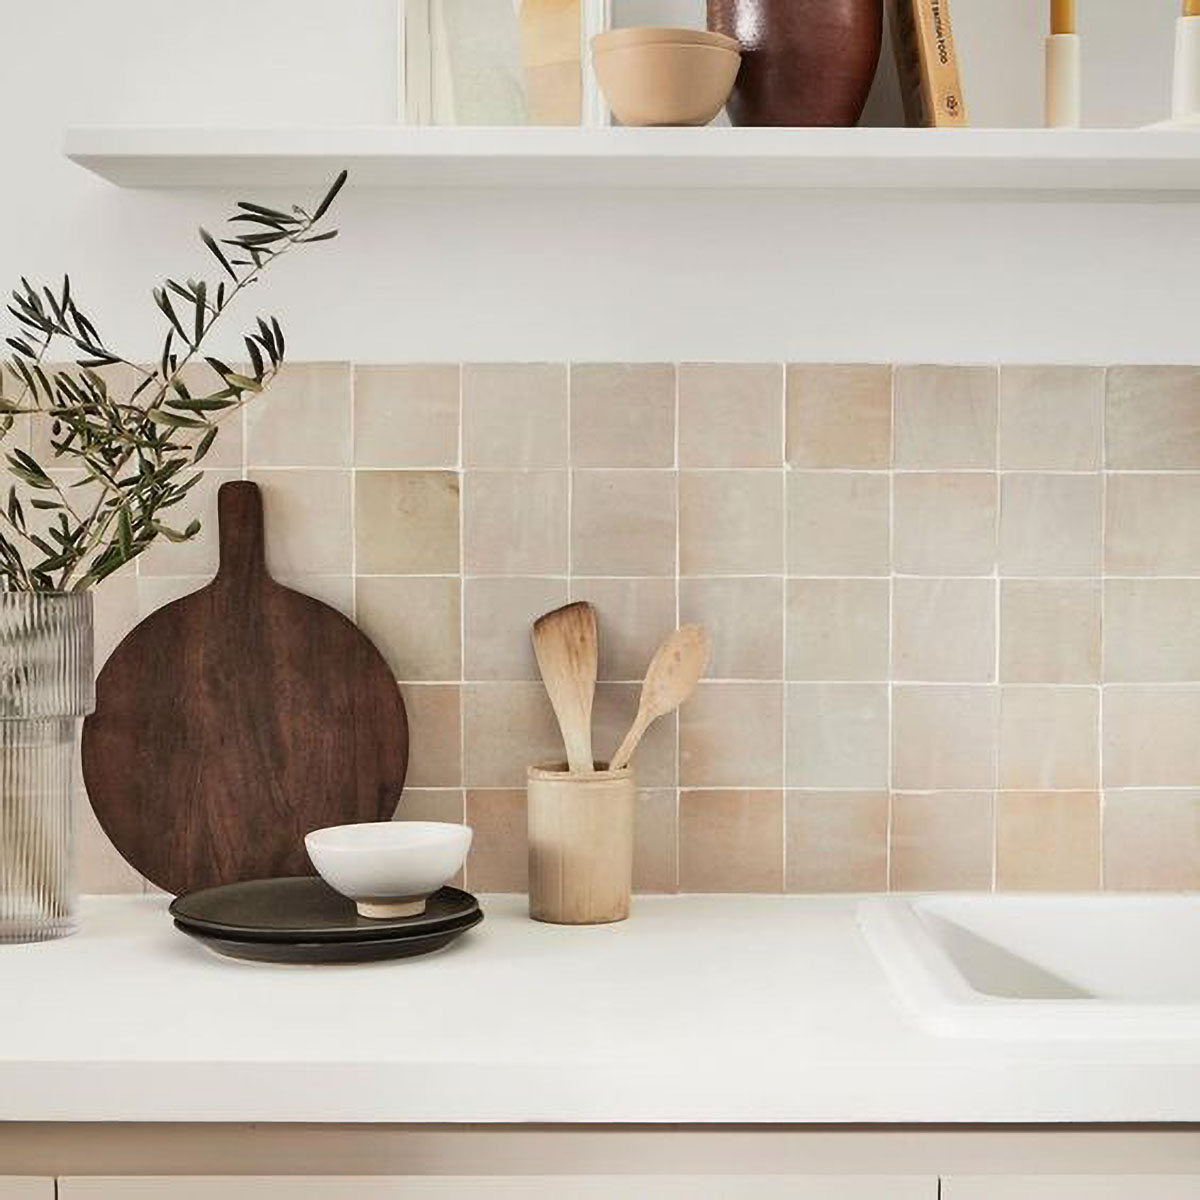 Kitchen tiles design